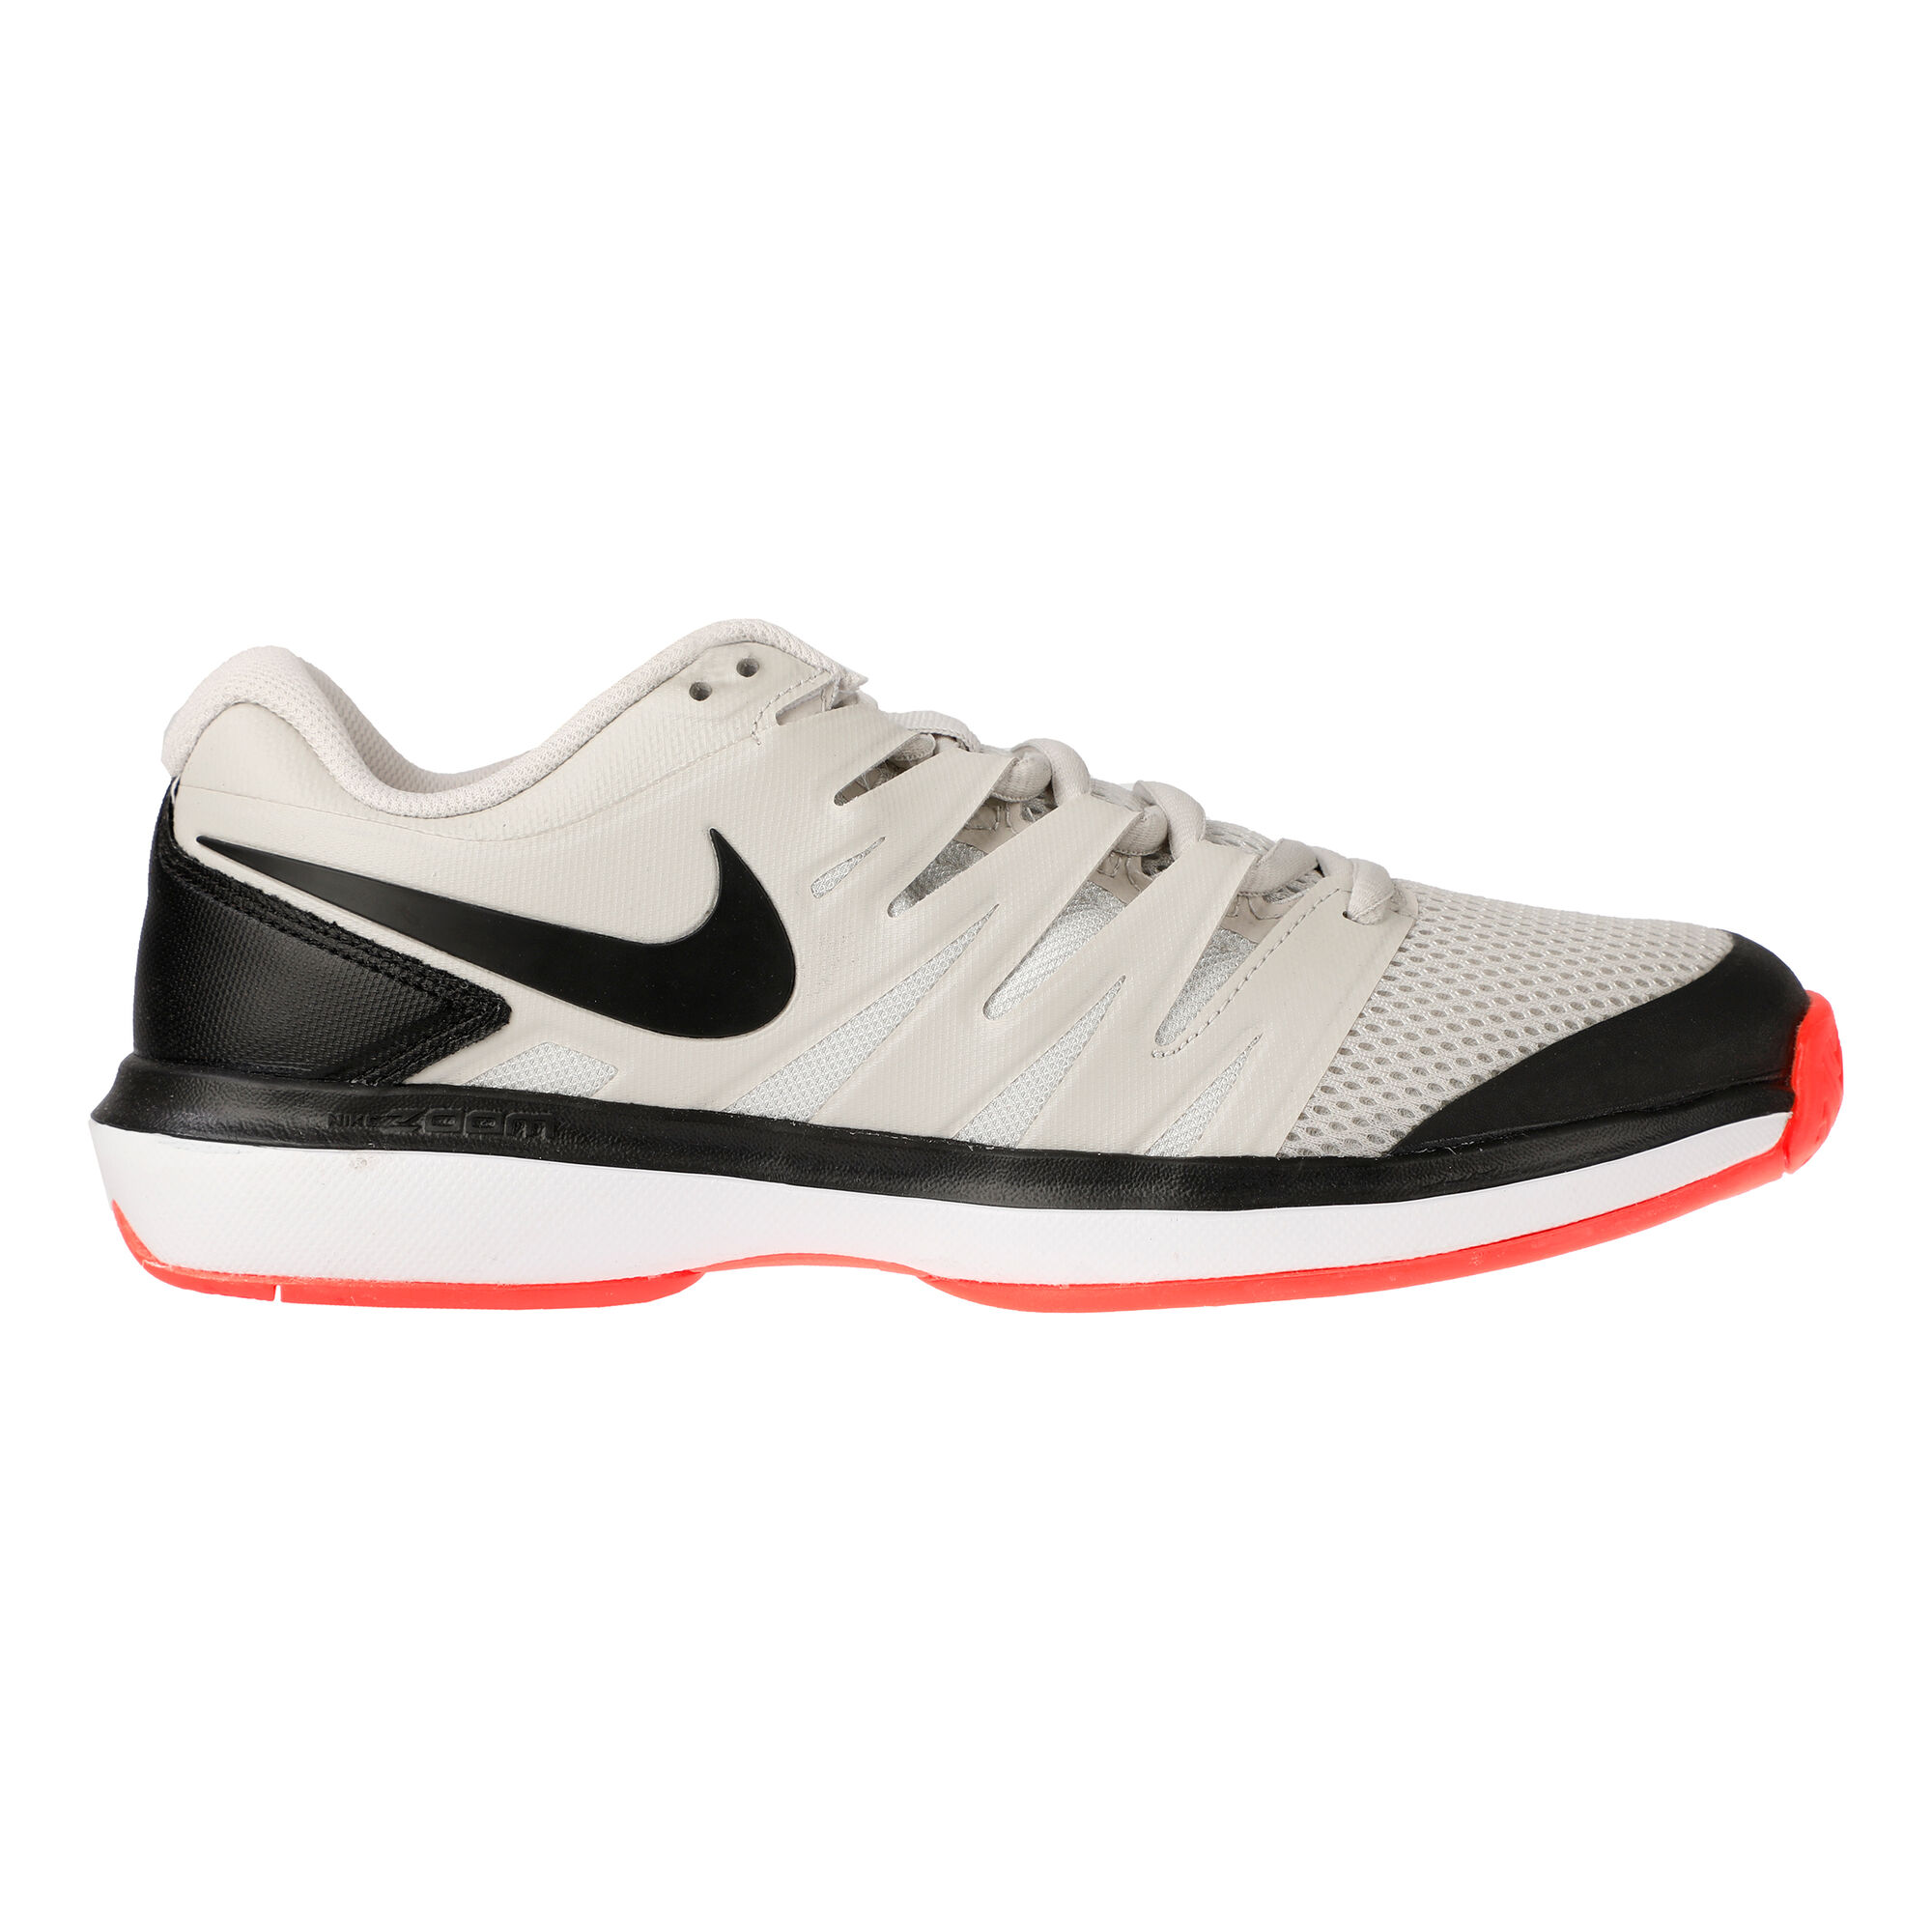 Buy Nike Air Zoom Prestige All Court Shoe Men Beige, Black online ...